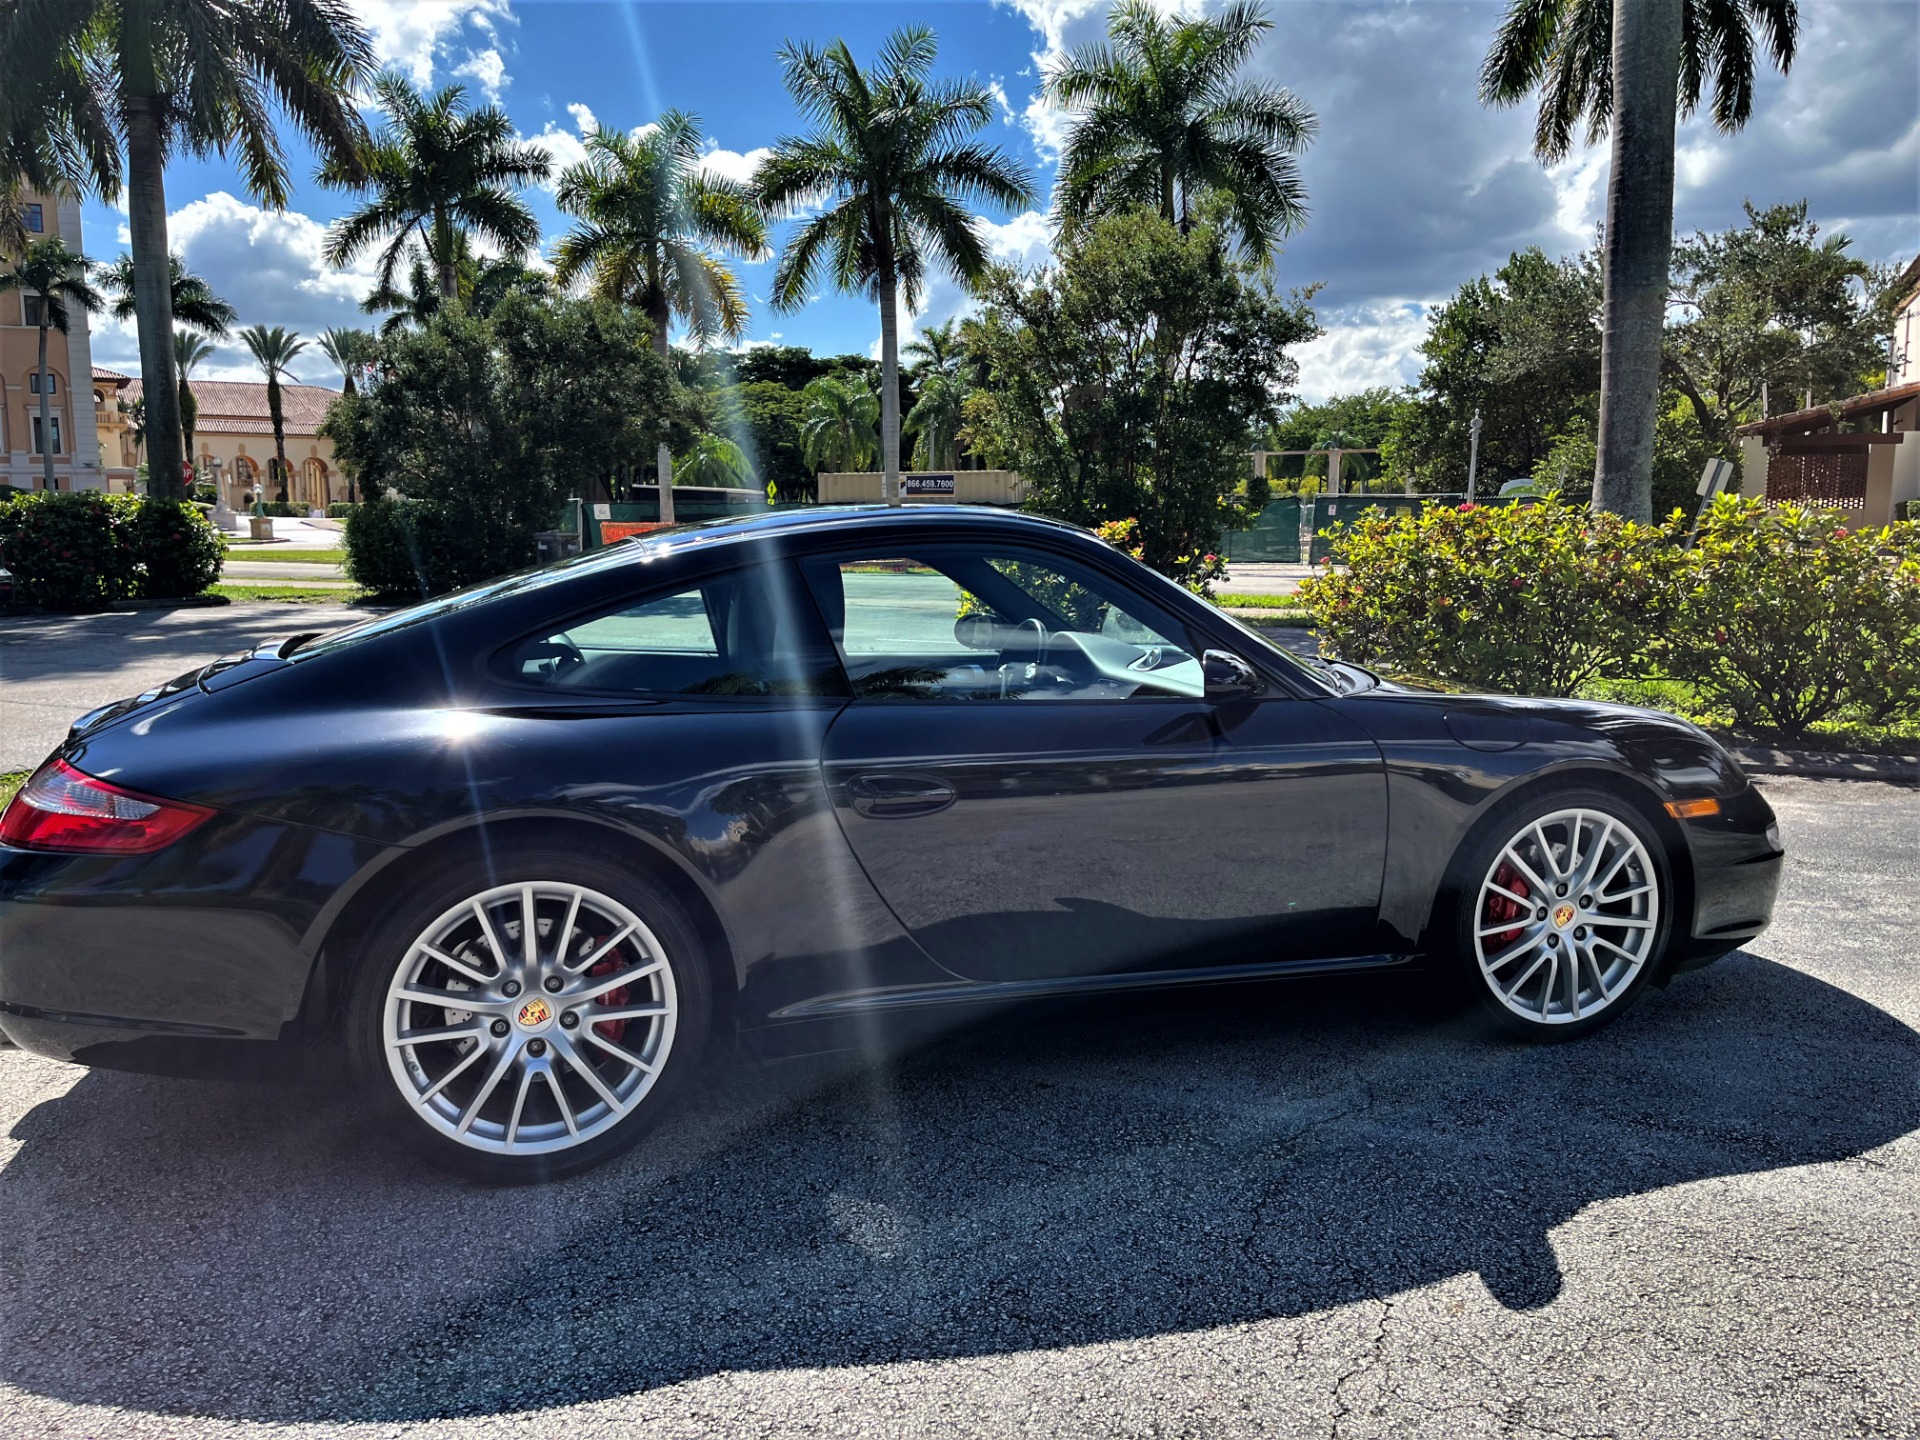 Used 2007 Porsche 911 Carrera S for sale $63,850 at The Gables Sports Cars in Miami FL 33146 3